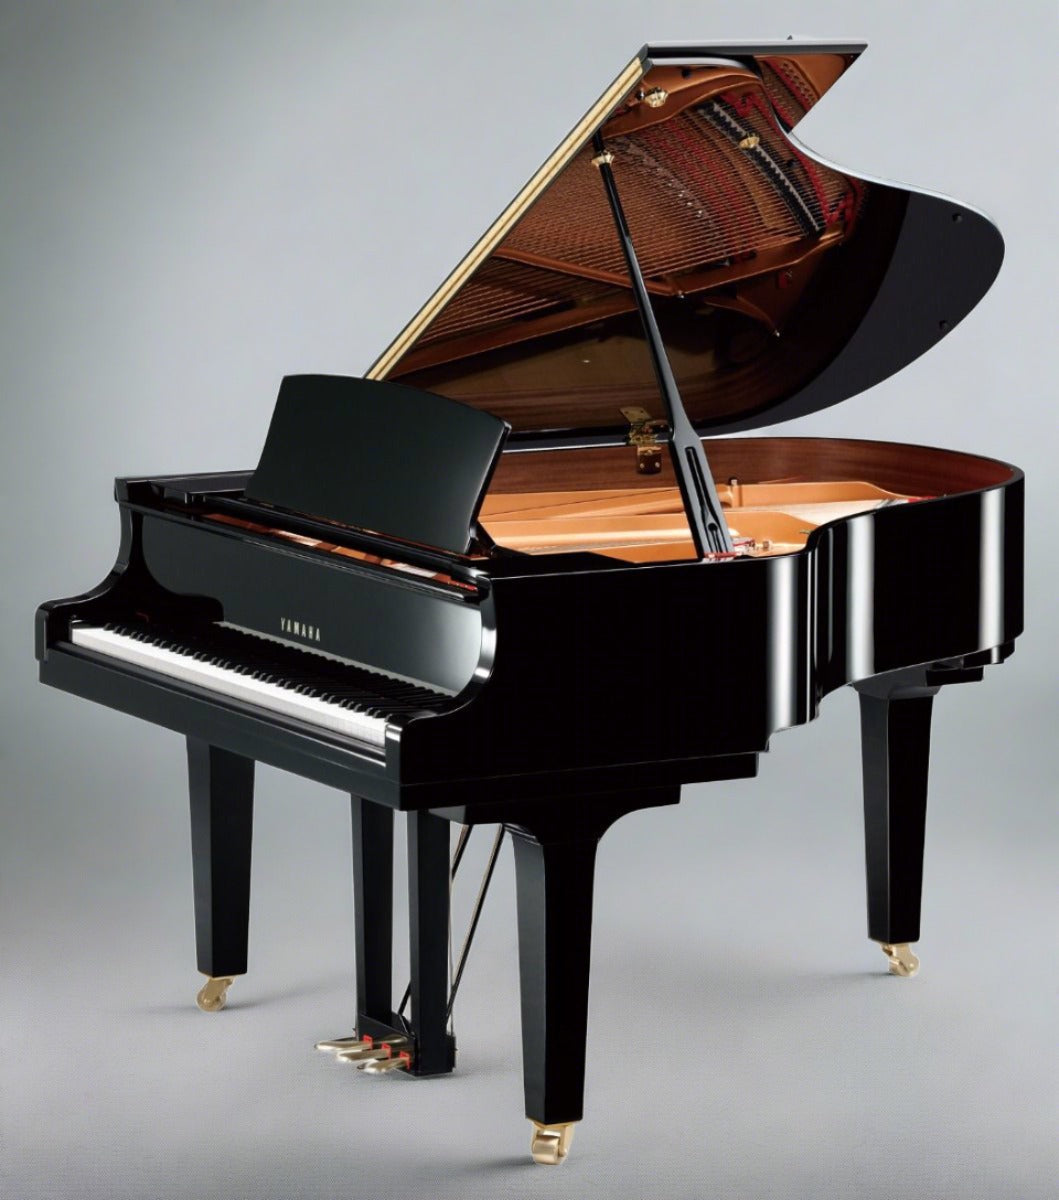 Yamaha P-525 Portable Piano